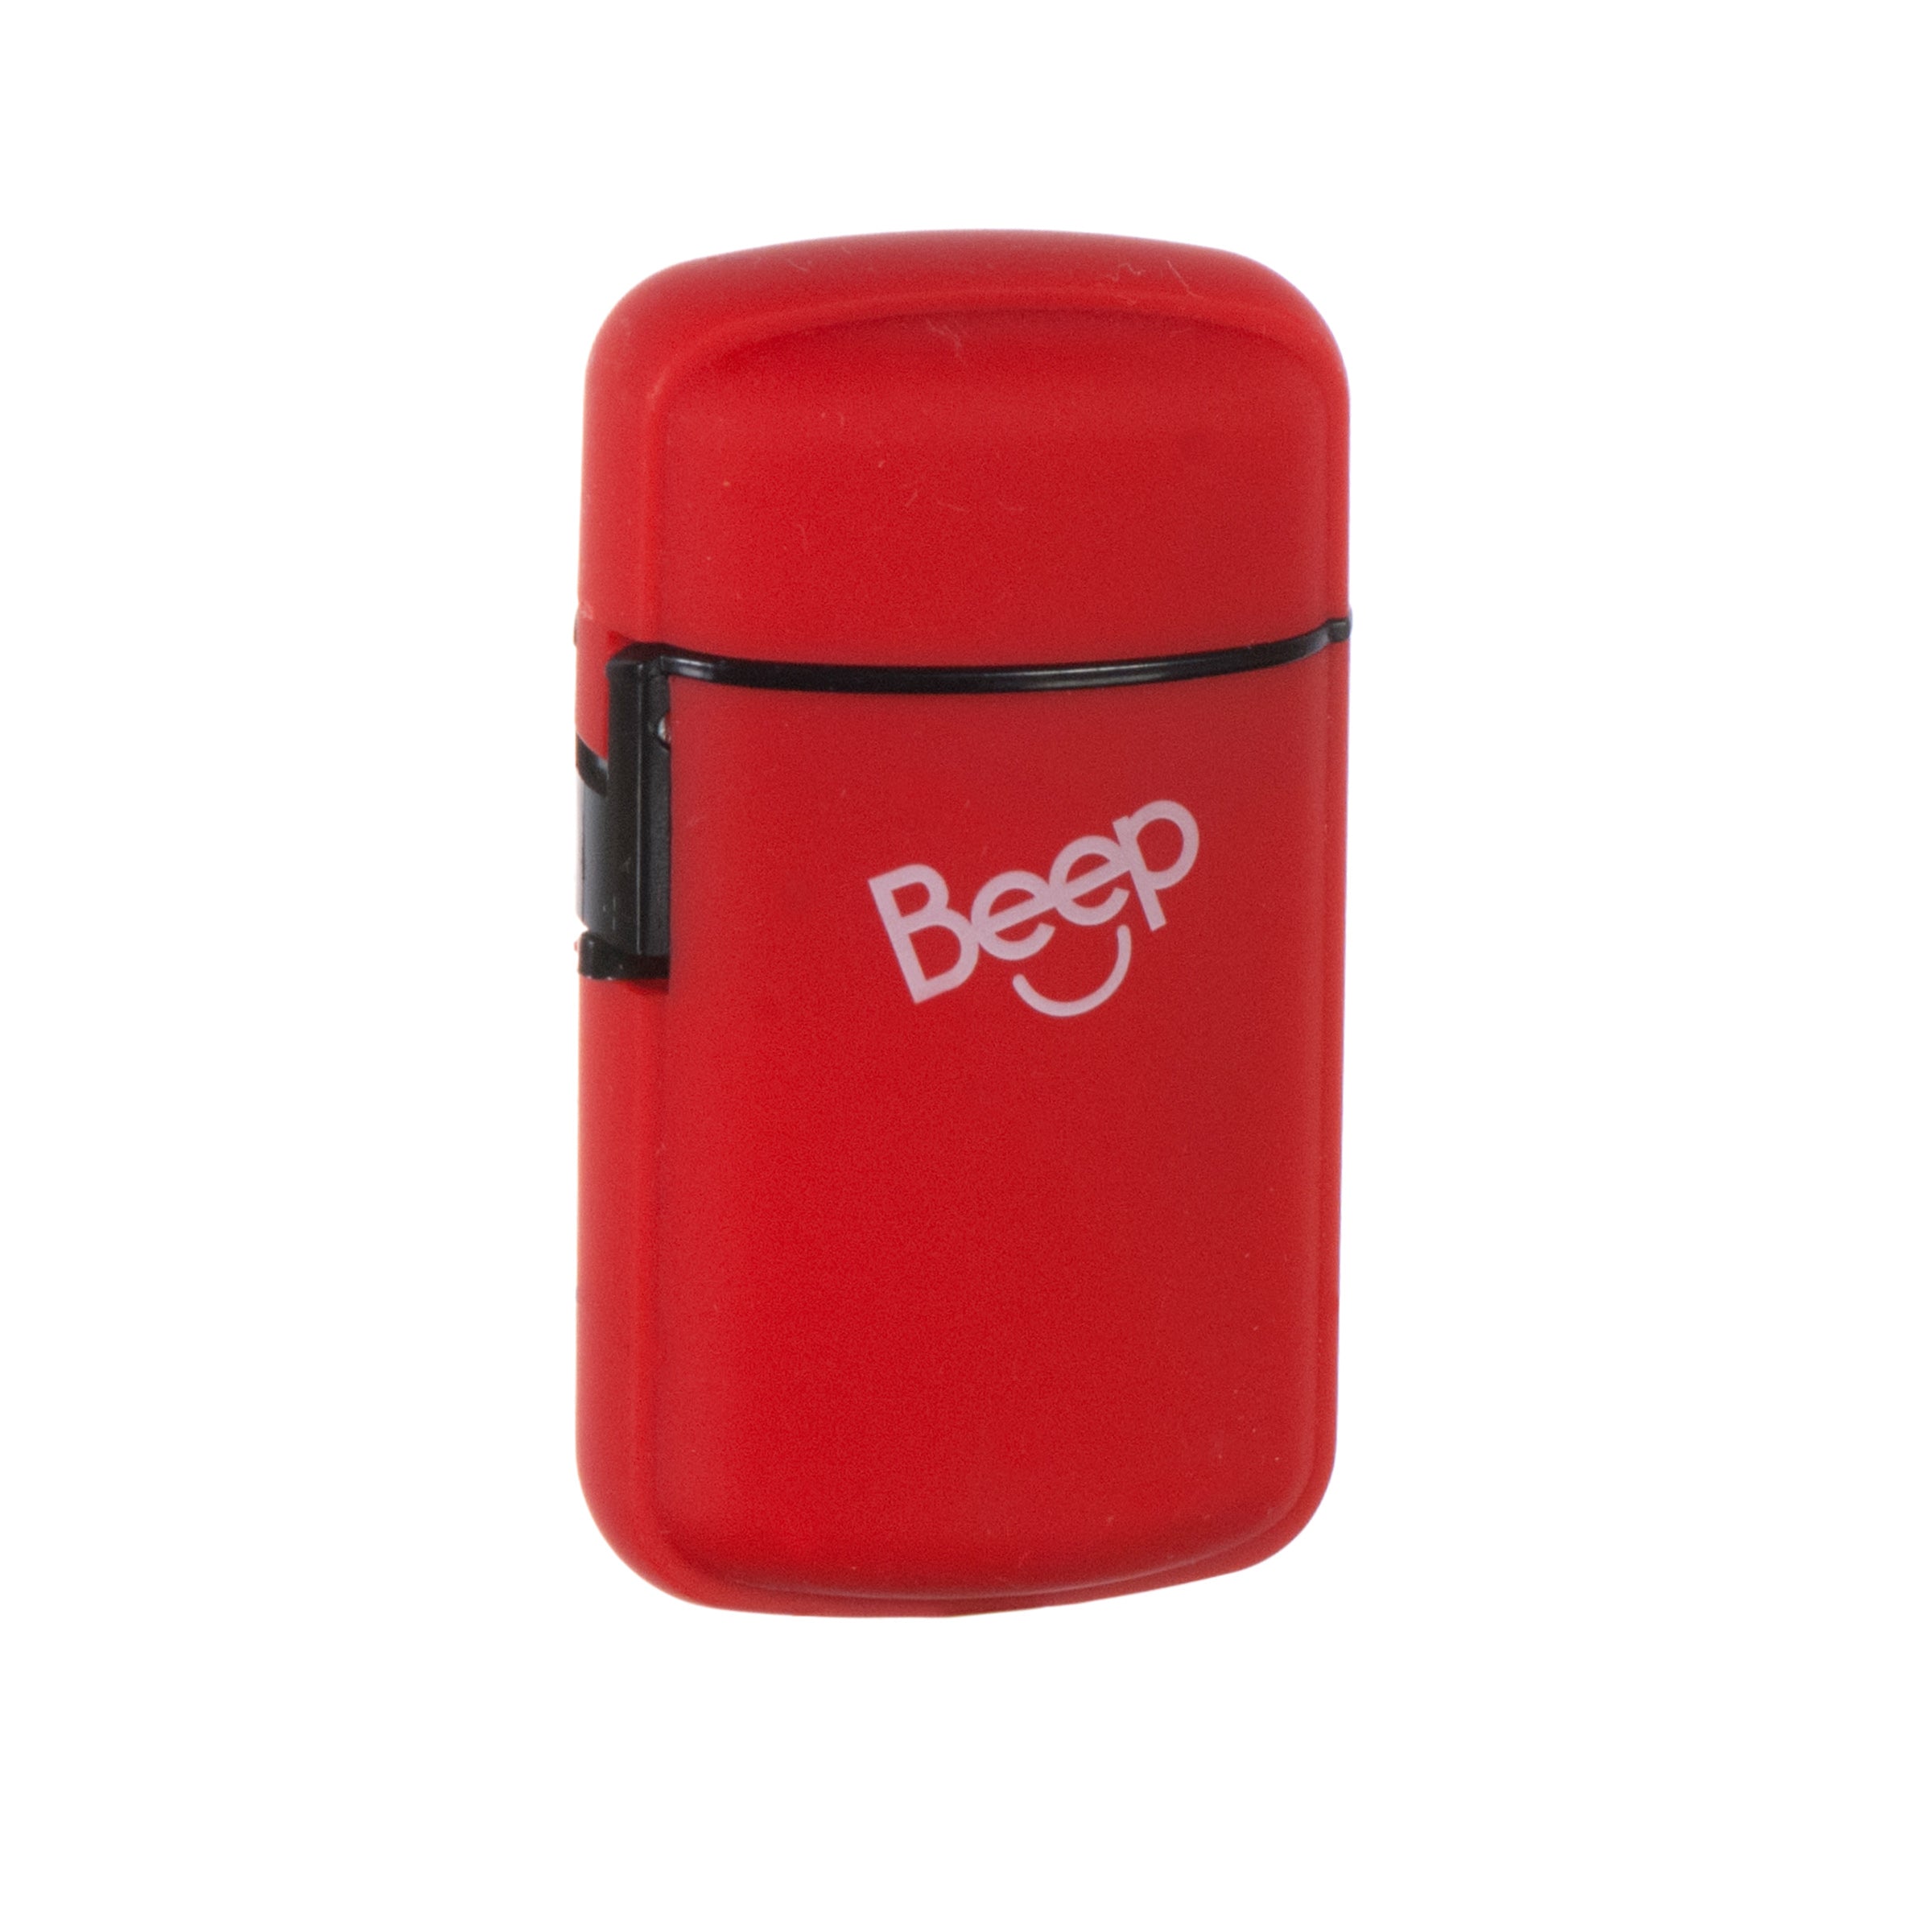 Beep Basic Torch Lighter